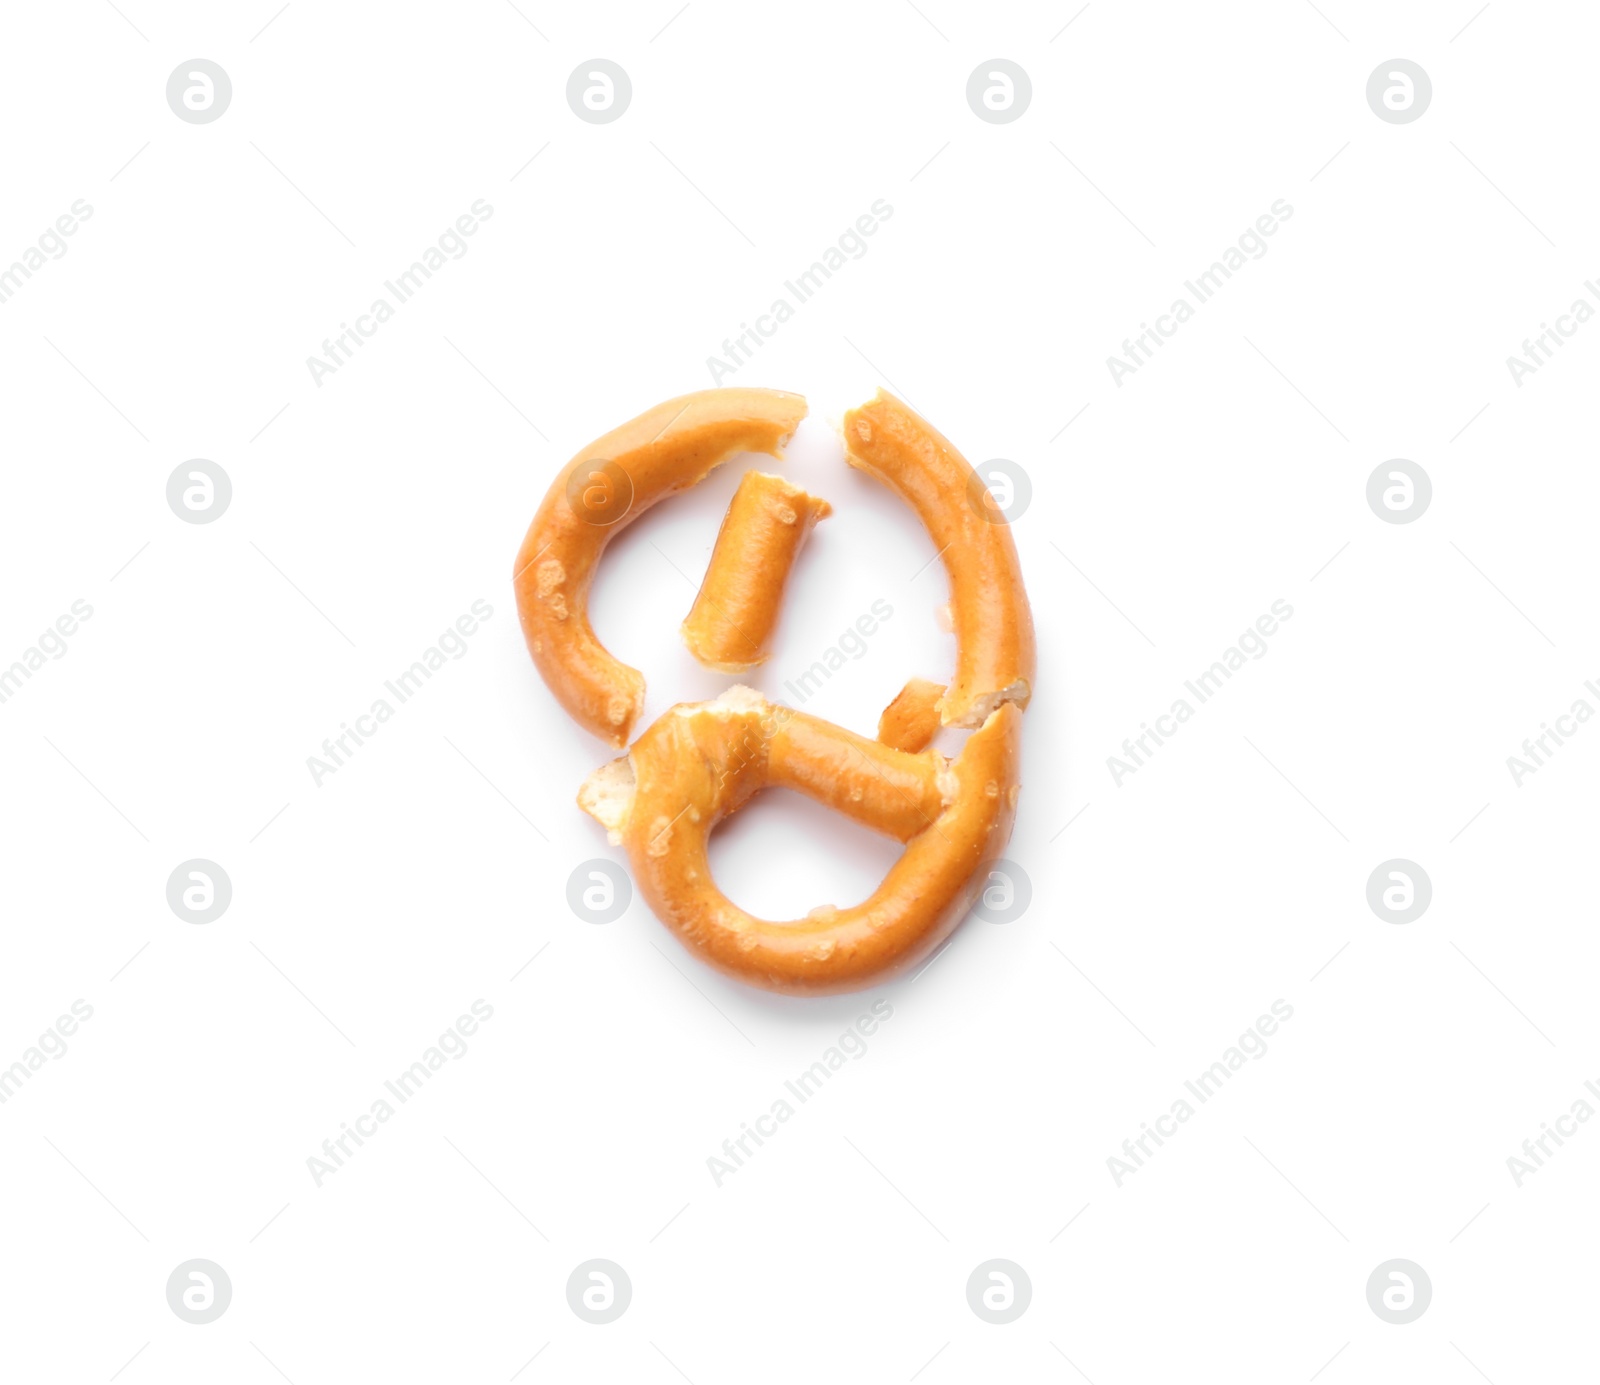 Photo of Broken crispy pretzel cracker isolated on white, top view